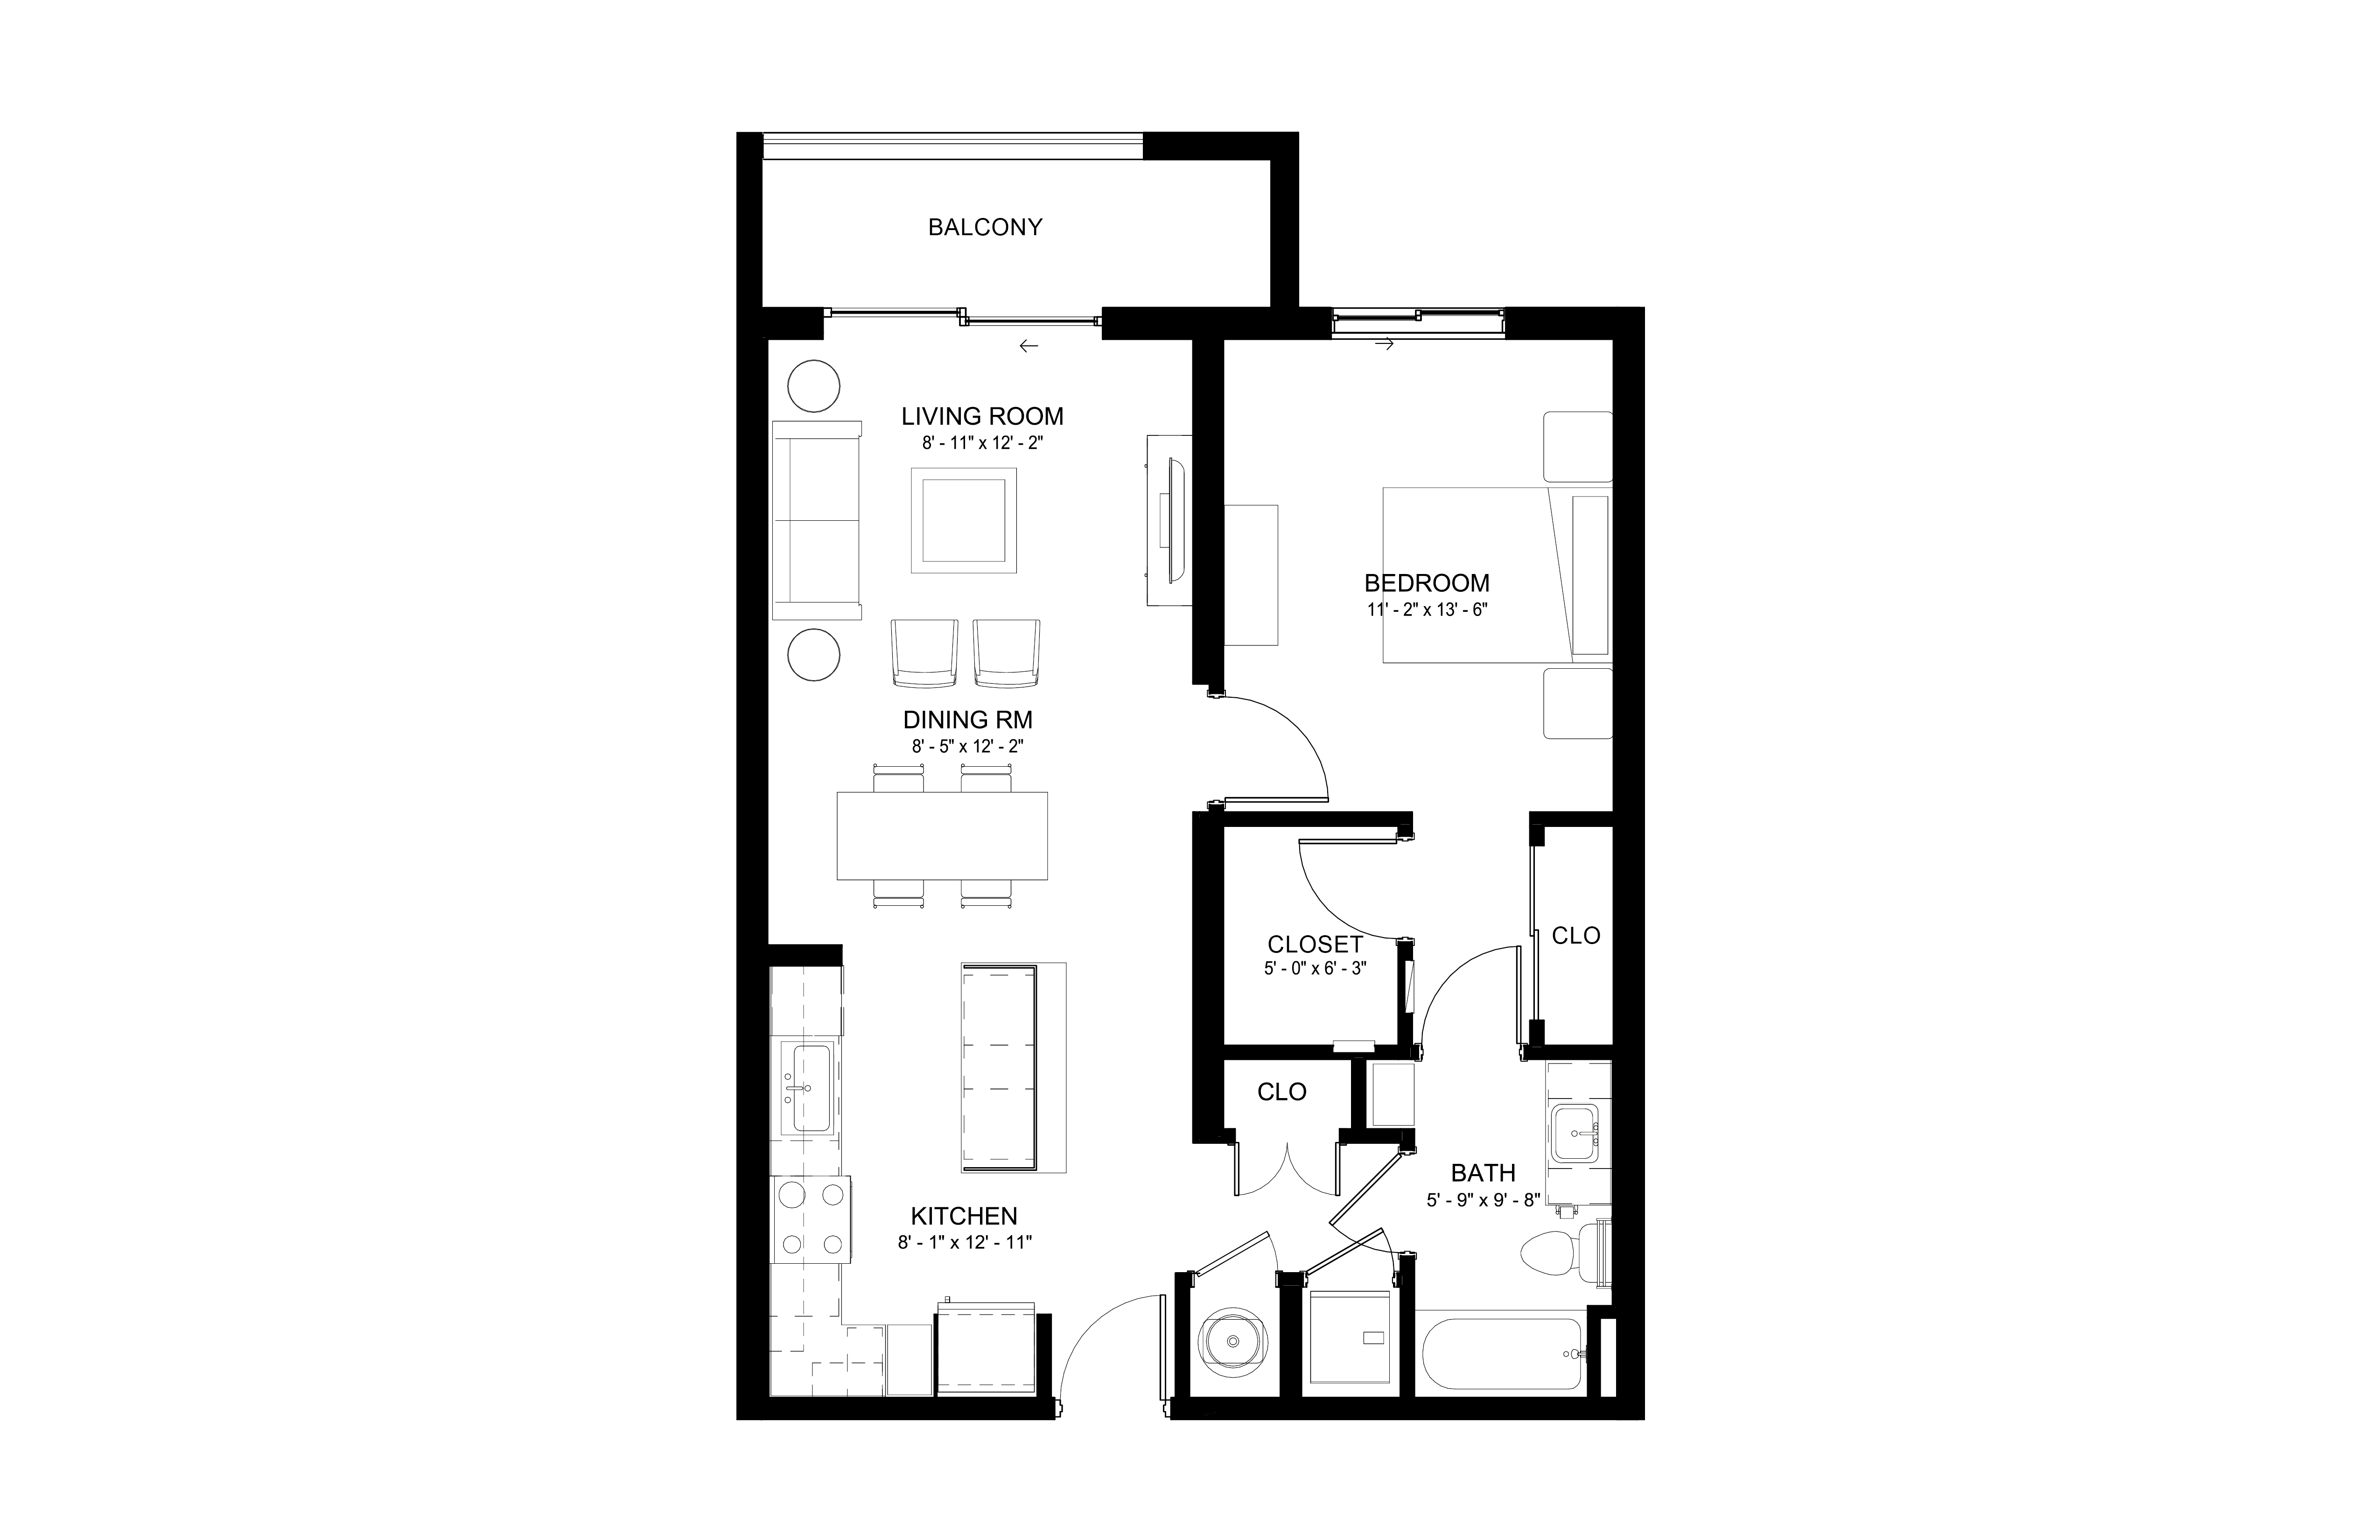 Apartment 522 floorplan